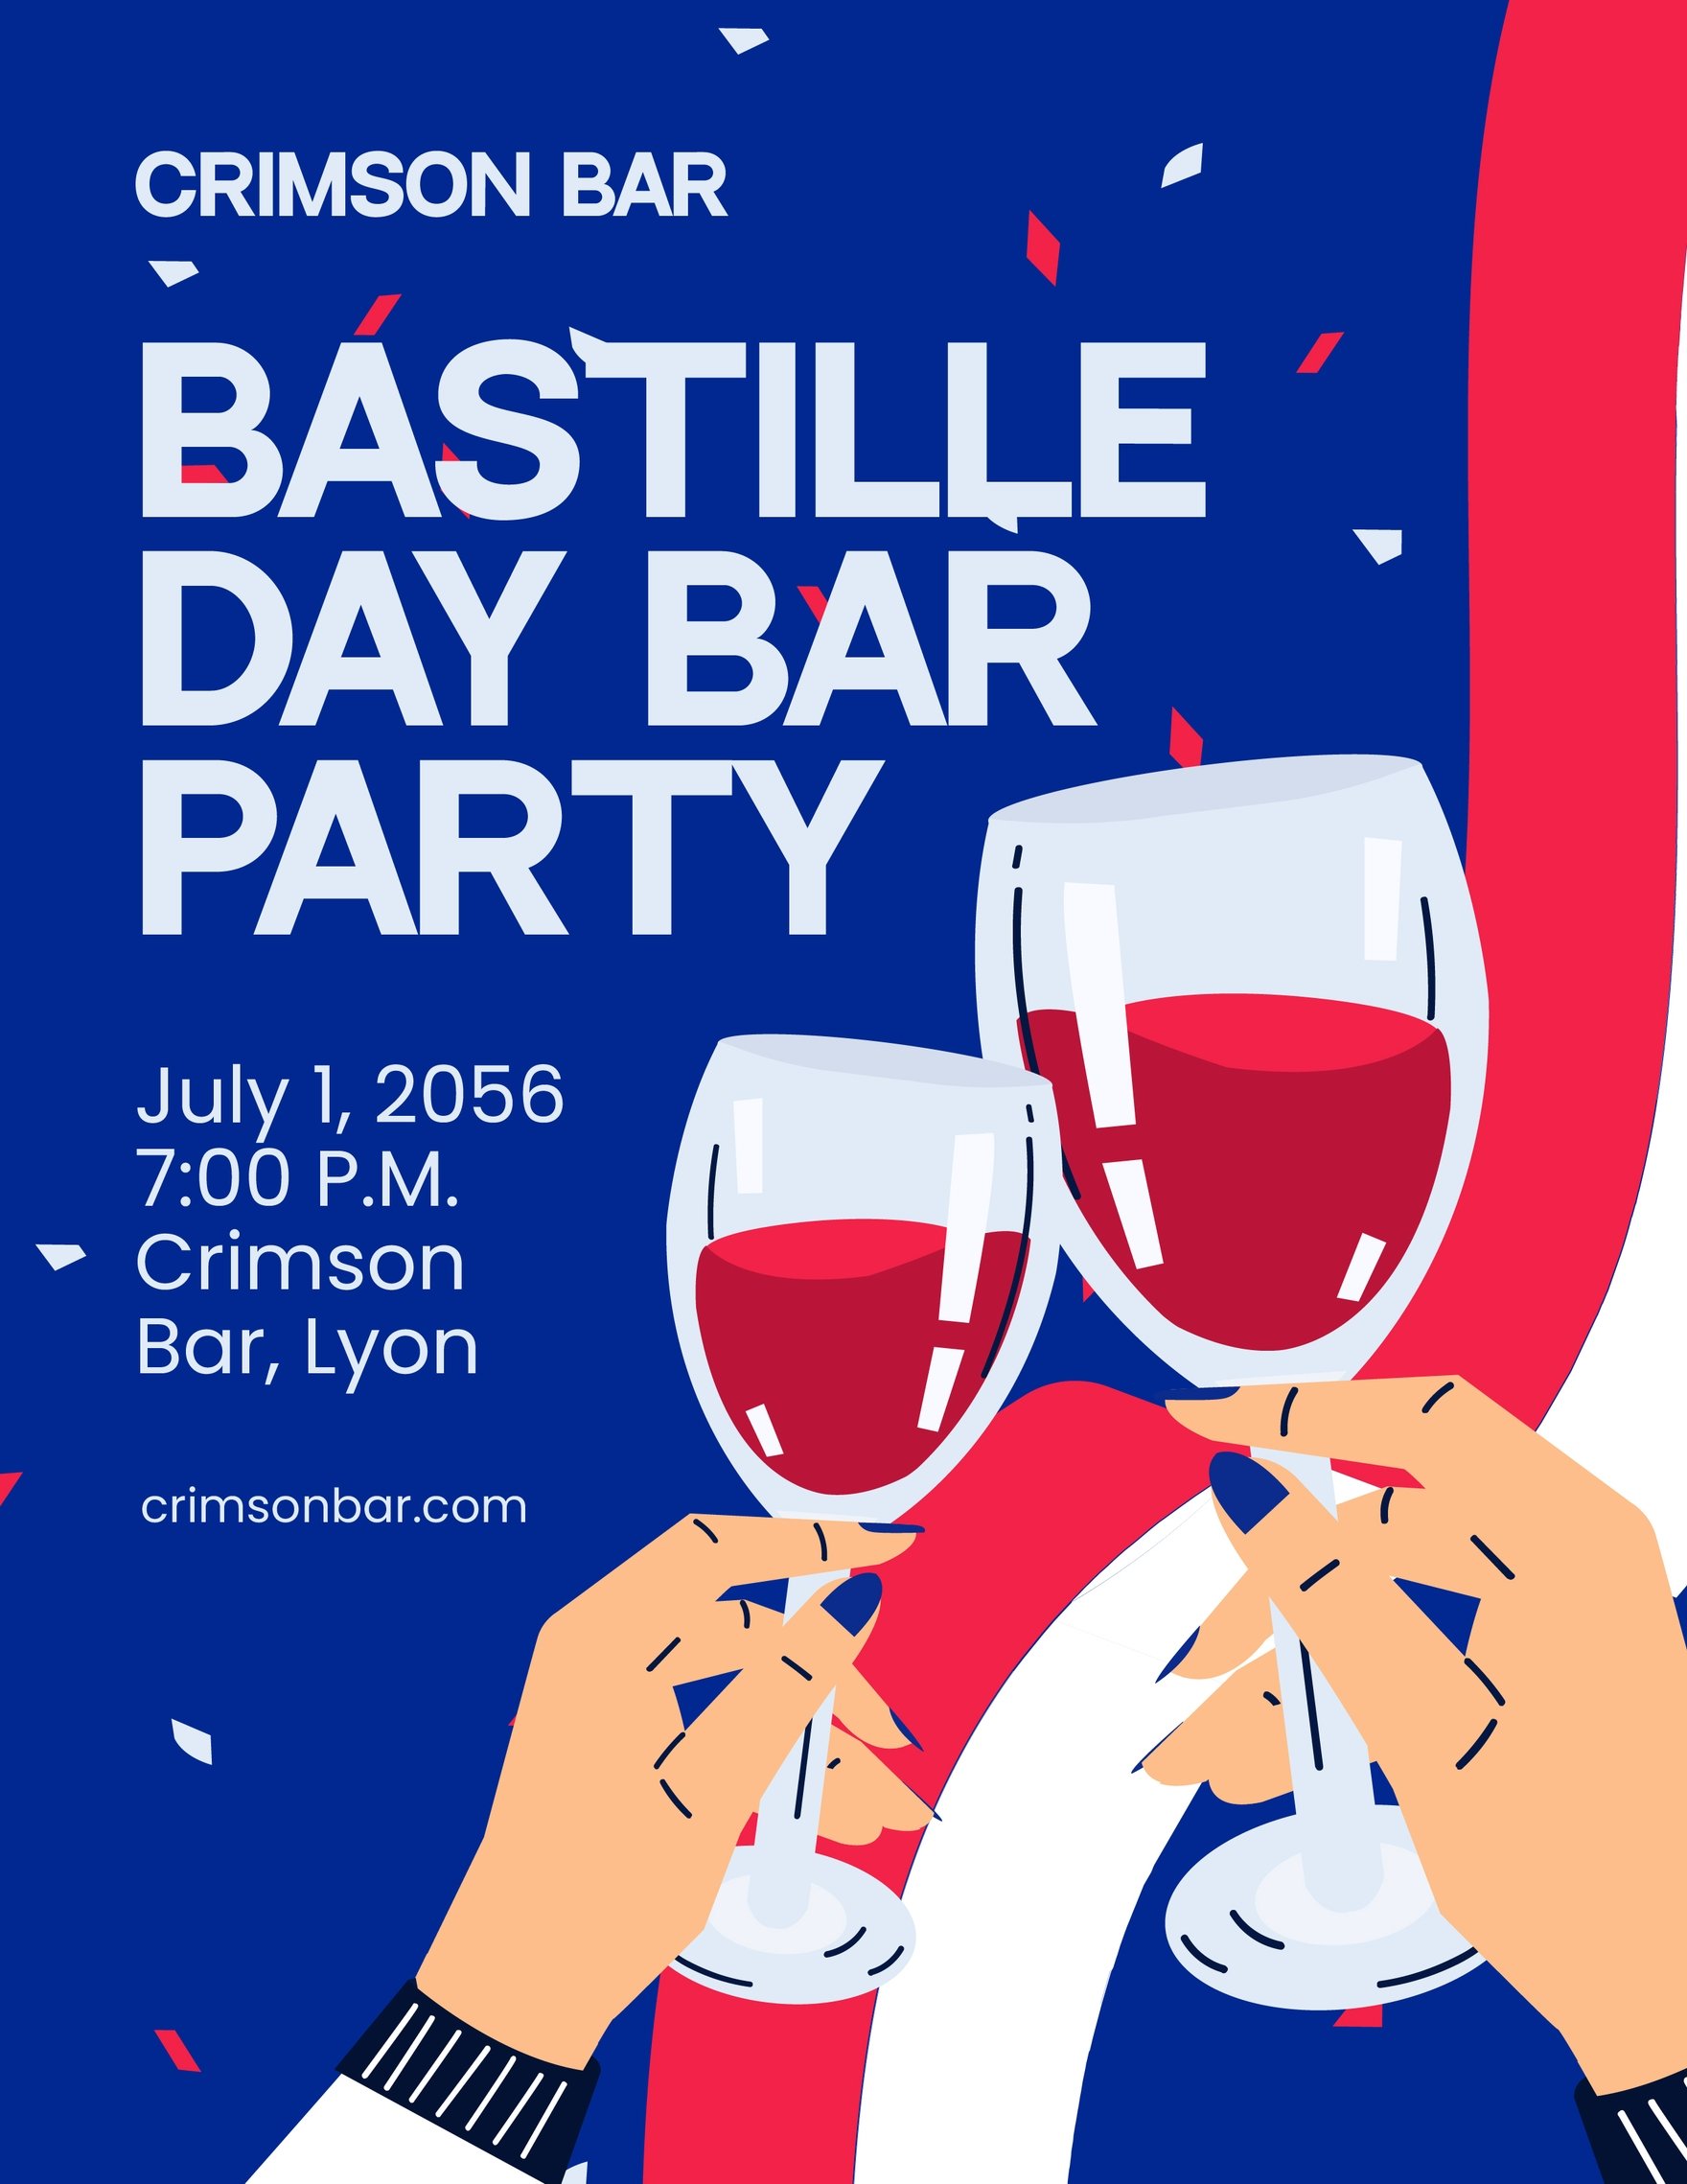 Bastille Day Bar Party Flyer in Word, Google Docs, Illustrator, PSD, Apple Pages, Publisher